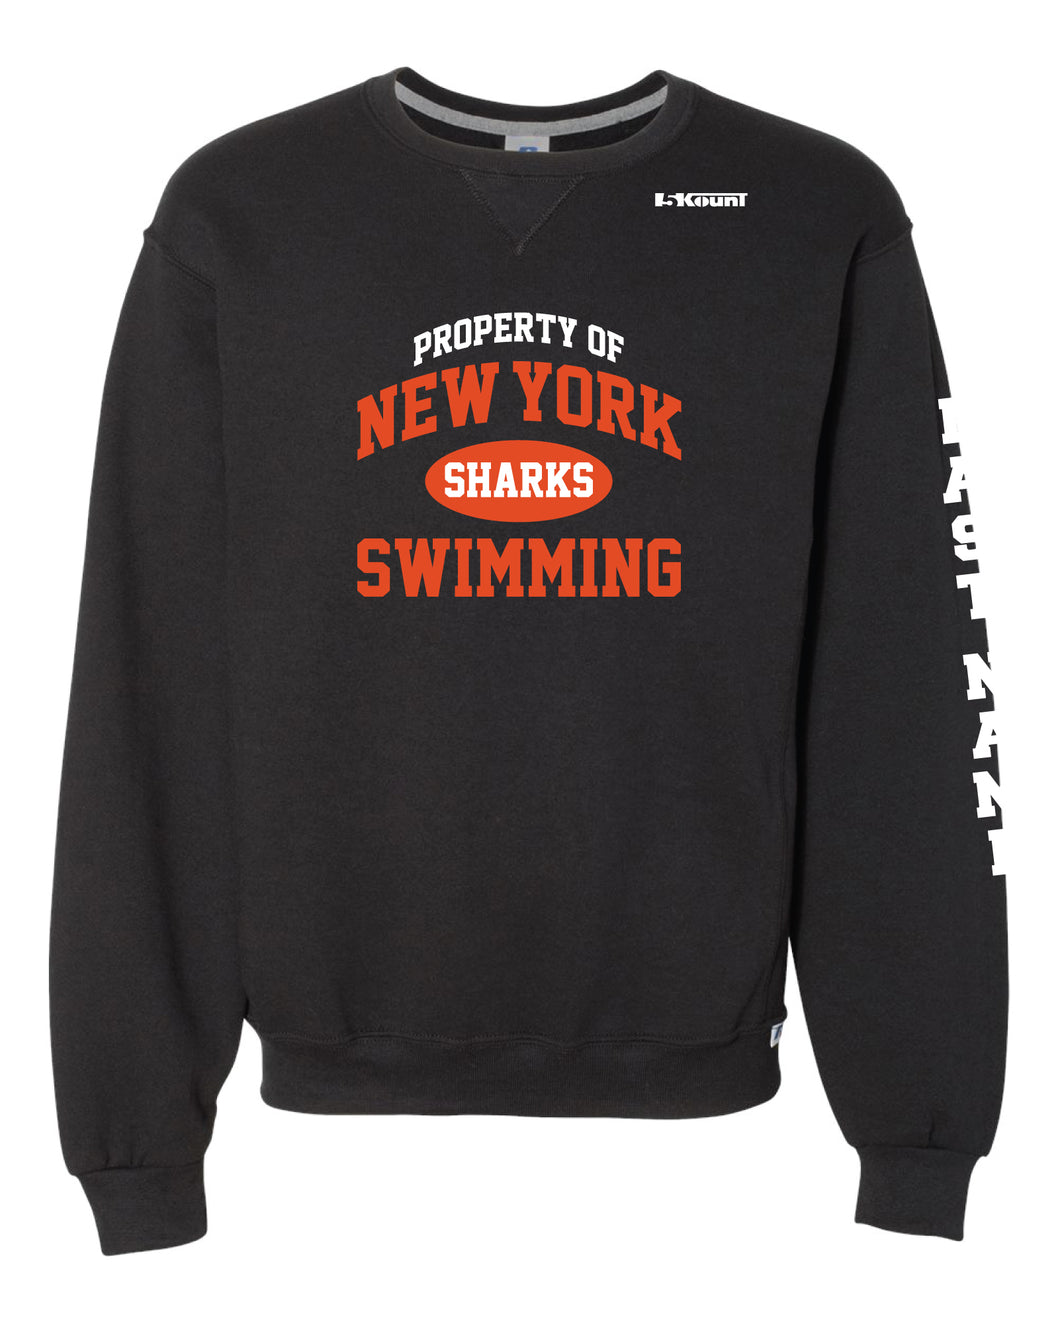 New York Sharks Russell Athletic Cotton Crewneck Sweatshirt v2 - Black - 5KounT2018